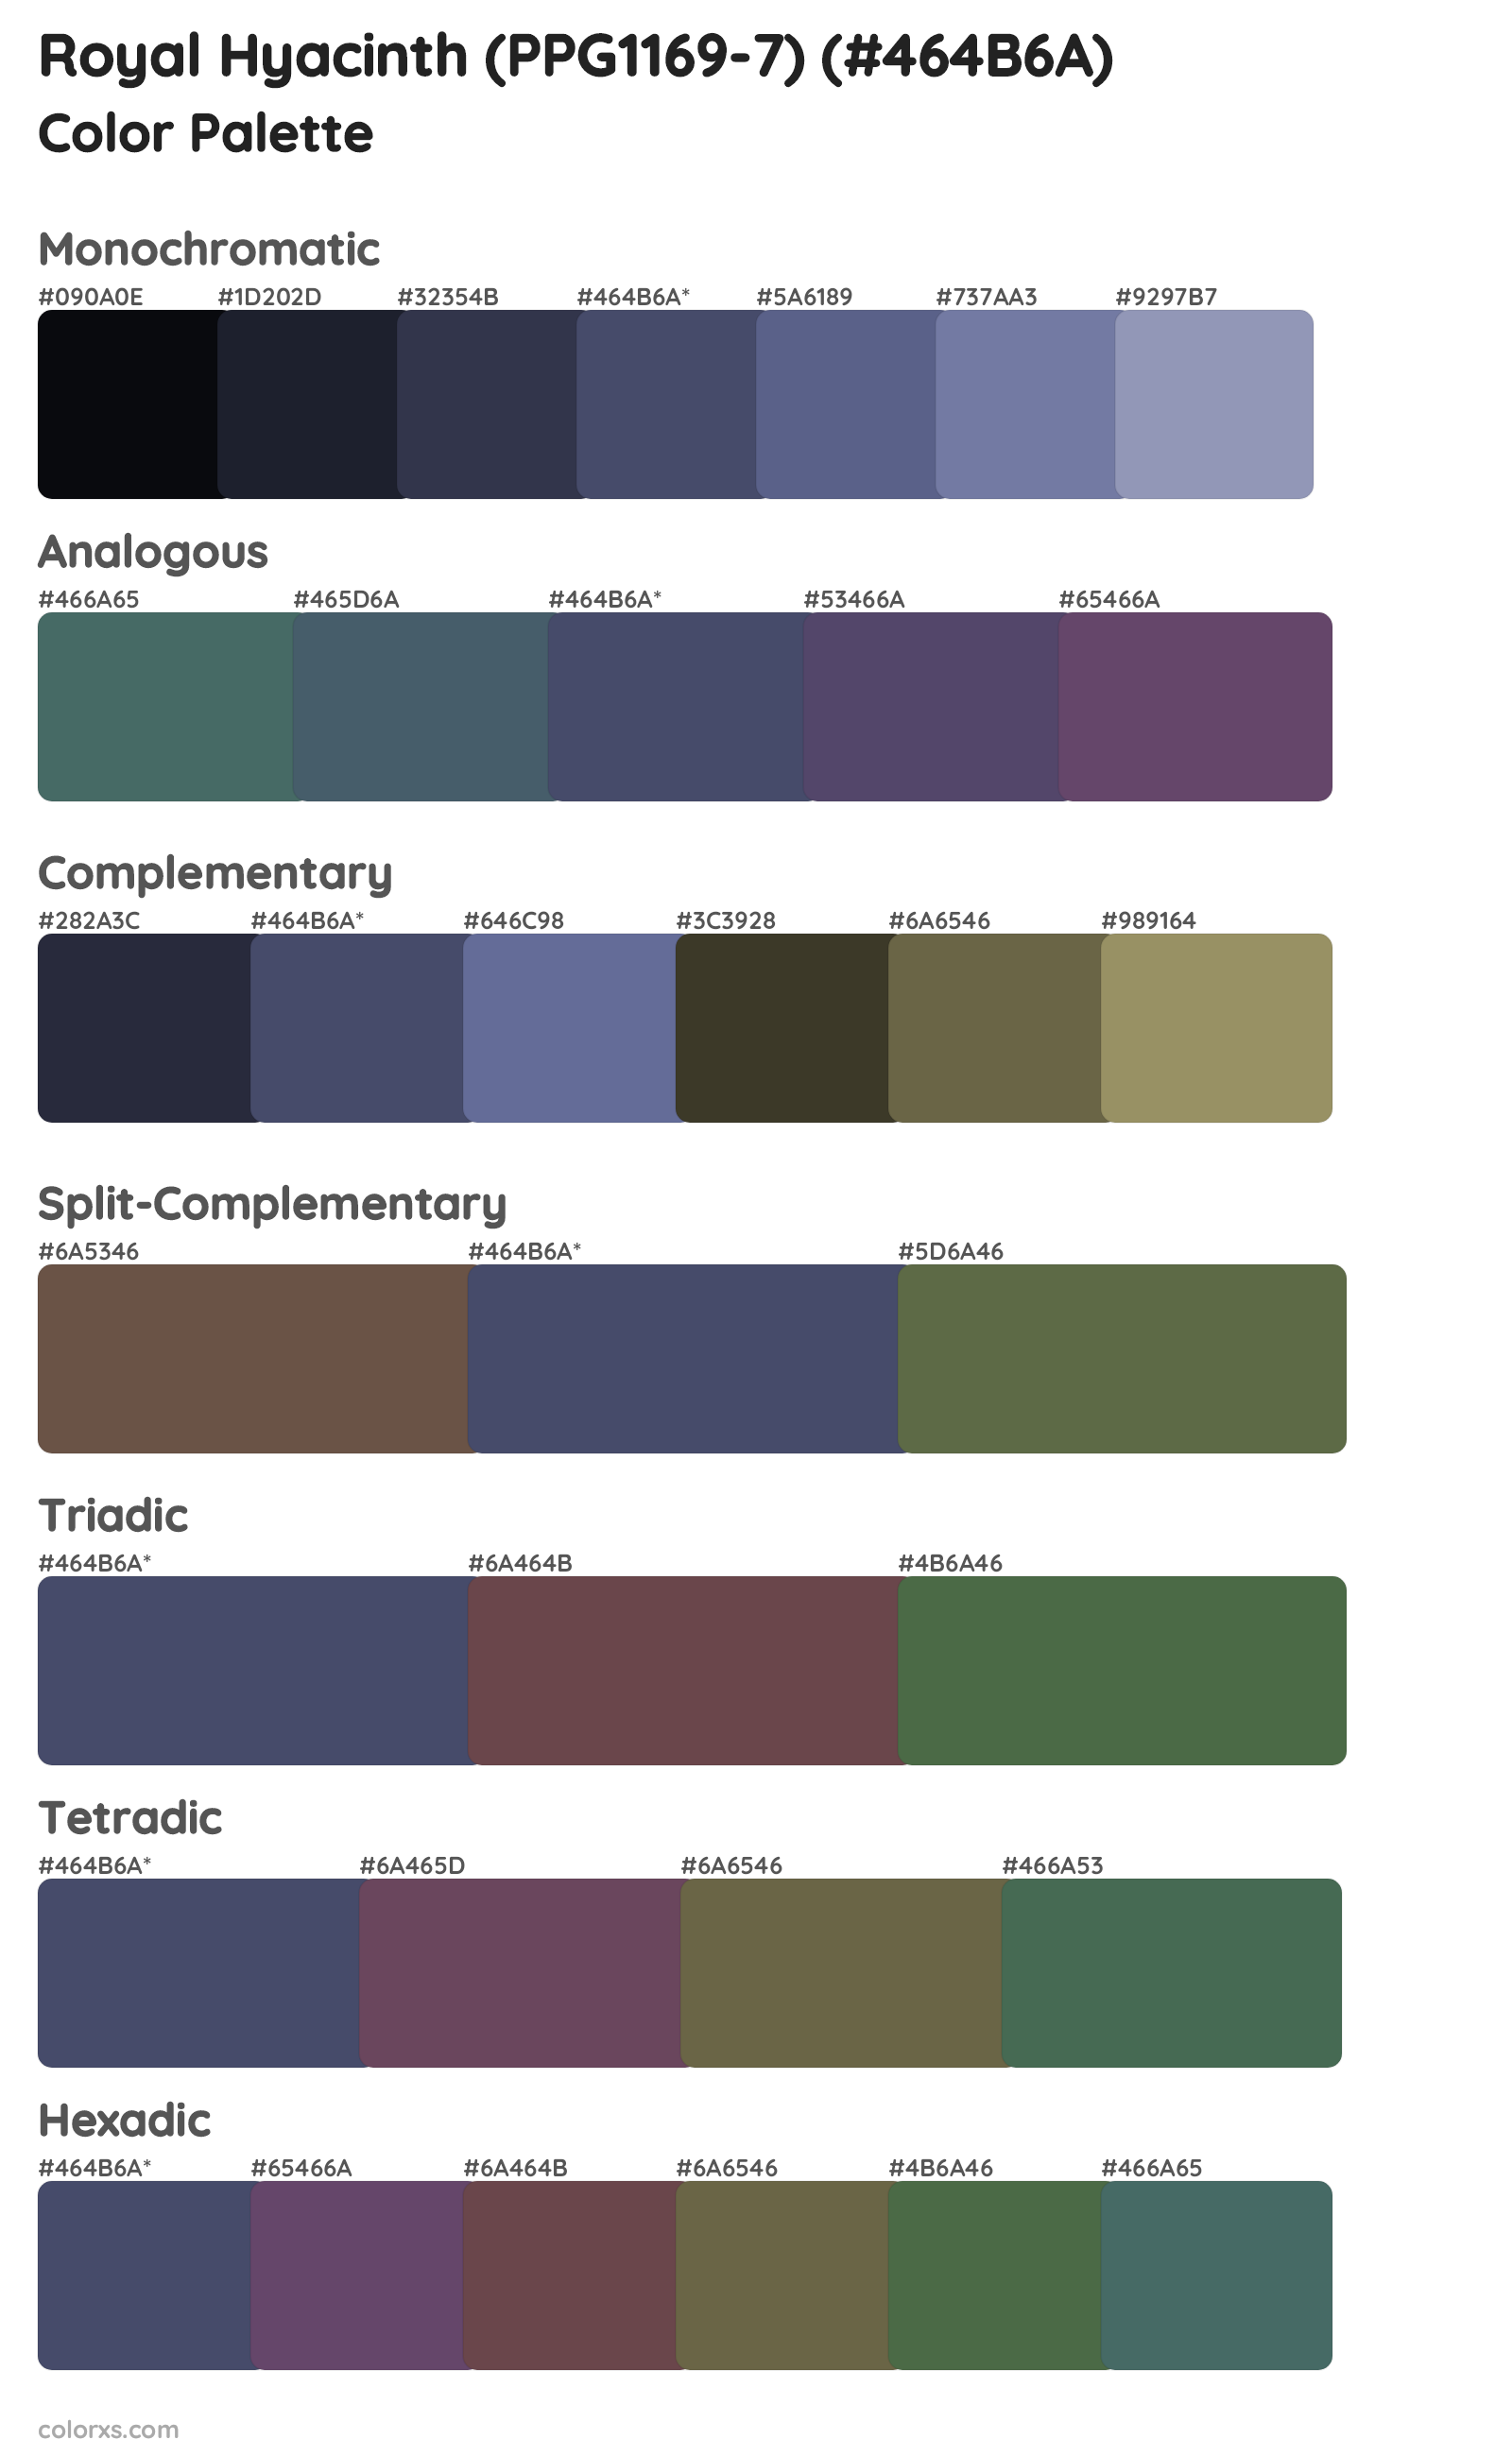 Royal Hyacinth (PPG1169-7) Color Scheme Palettes